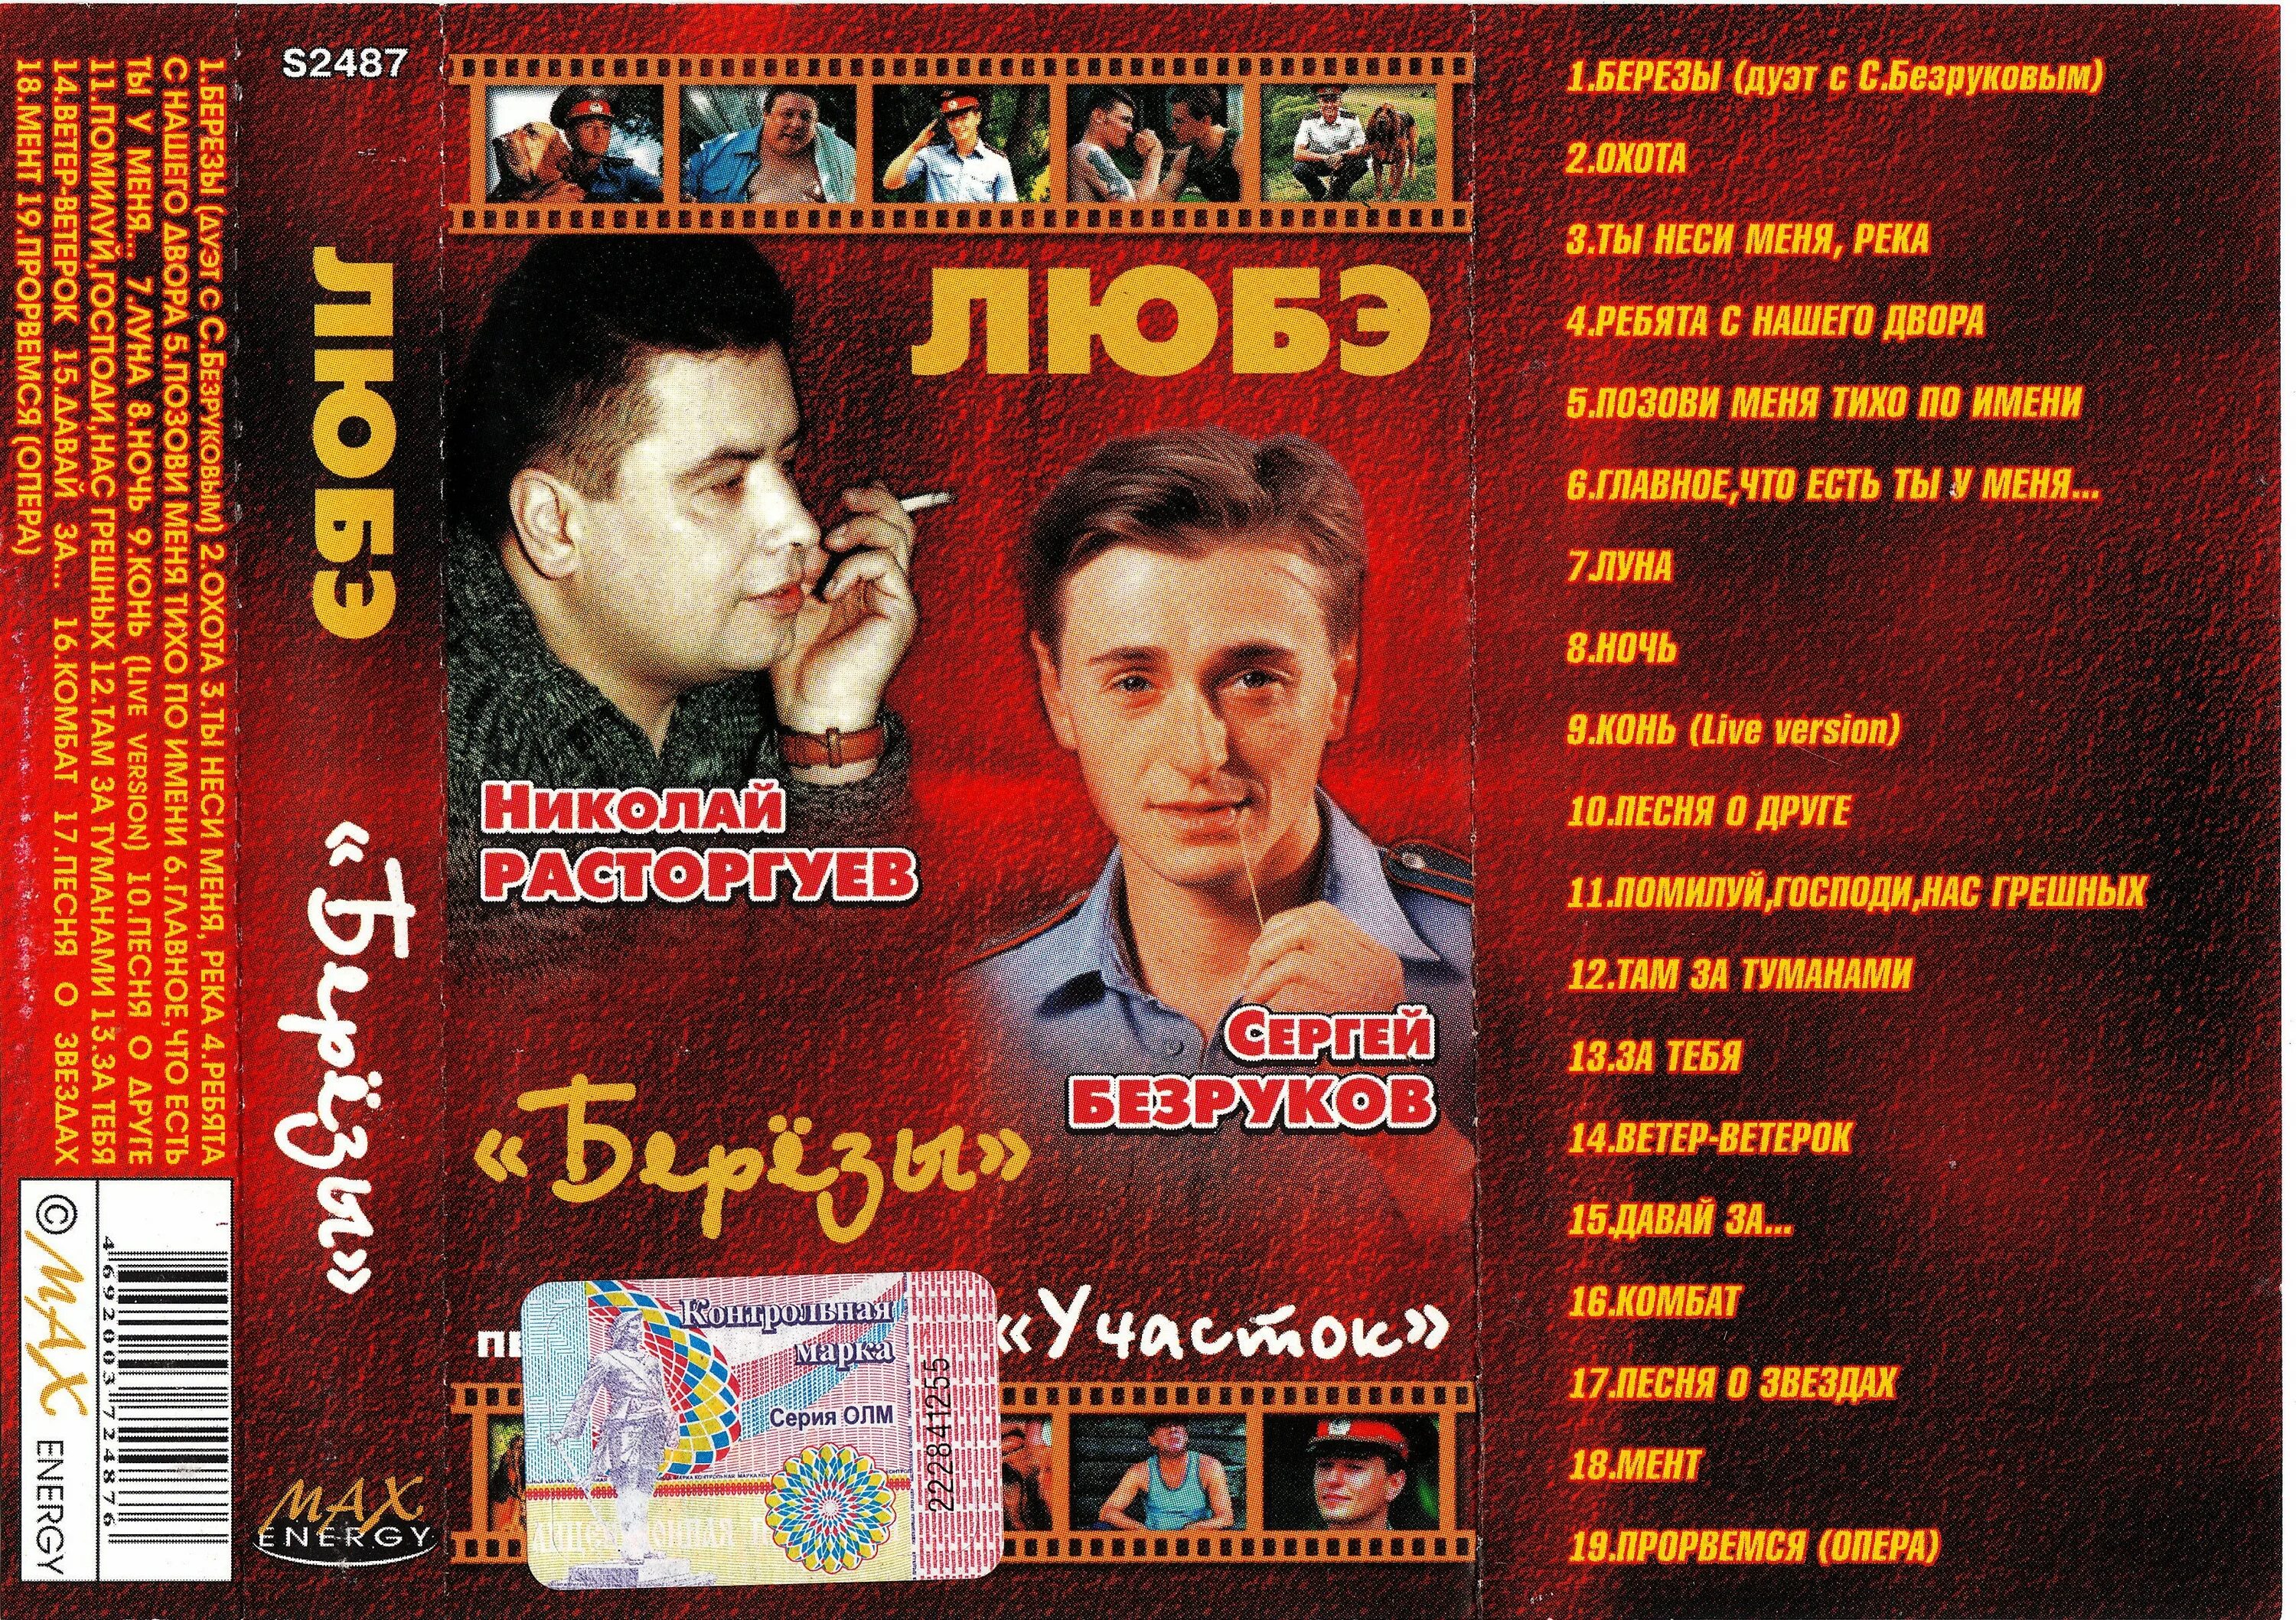 Альбом песен любэ. Любэ кассета 2003. Аудиокассета группы Любэ. Берёзы Безруков Любэ кассета.